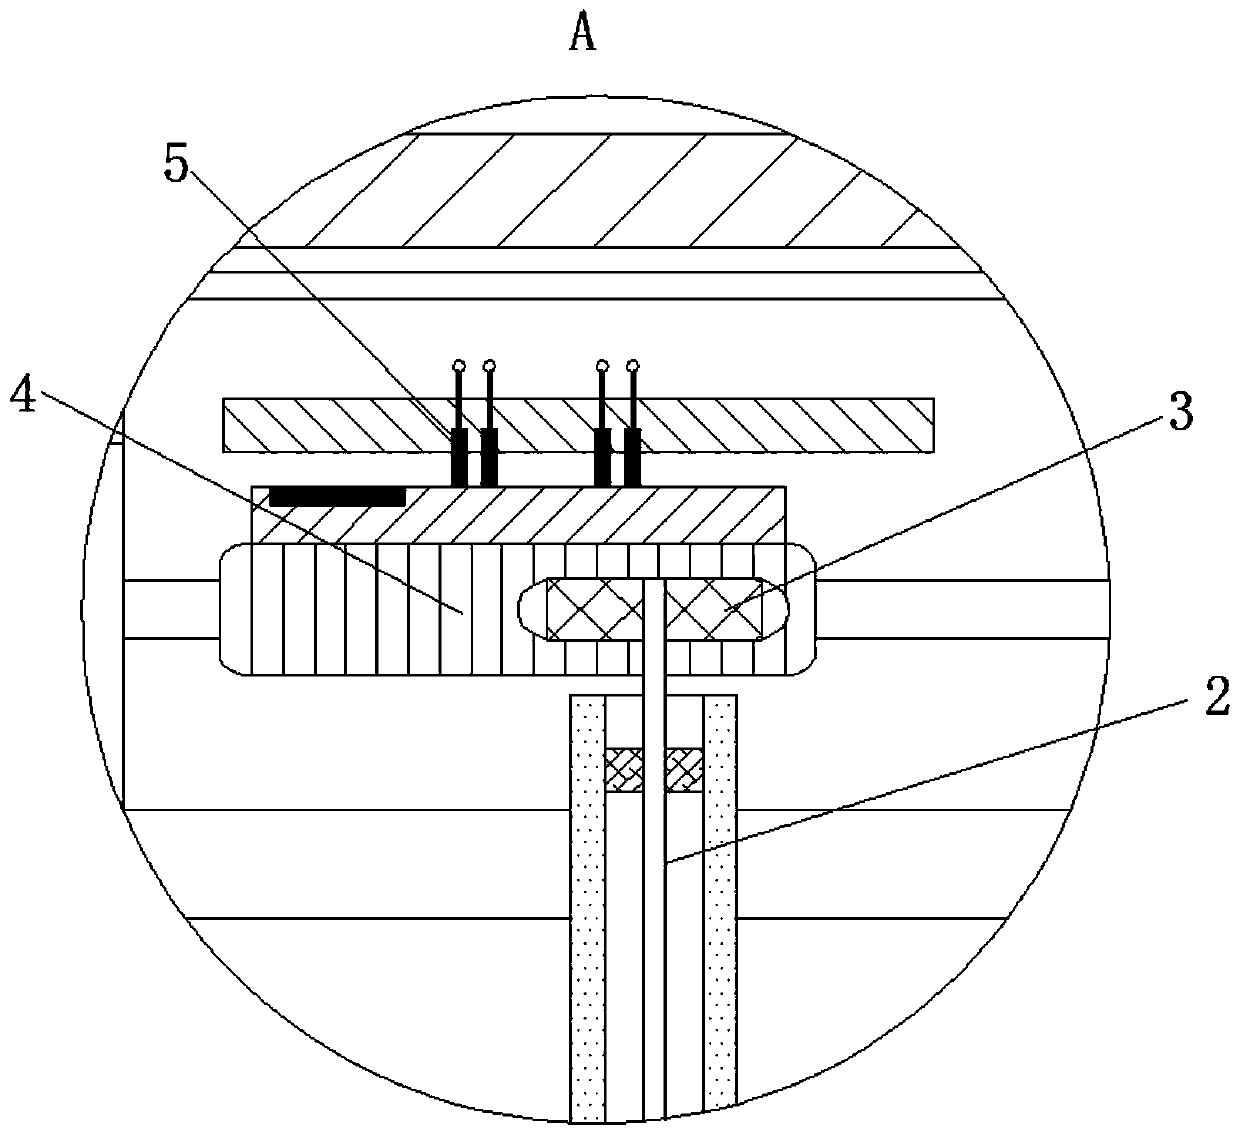 Memory mounting cabinet heat dissipation device based on bimetallic strip principle